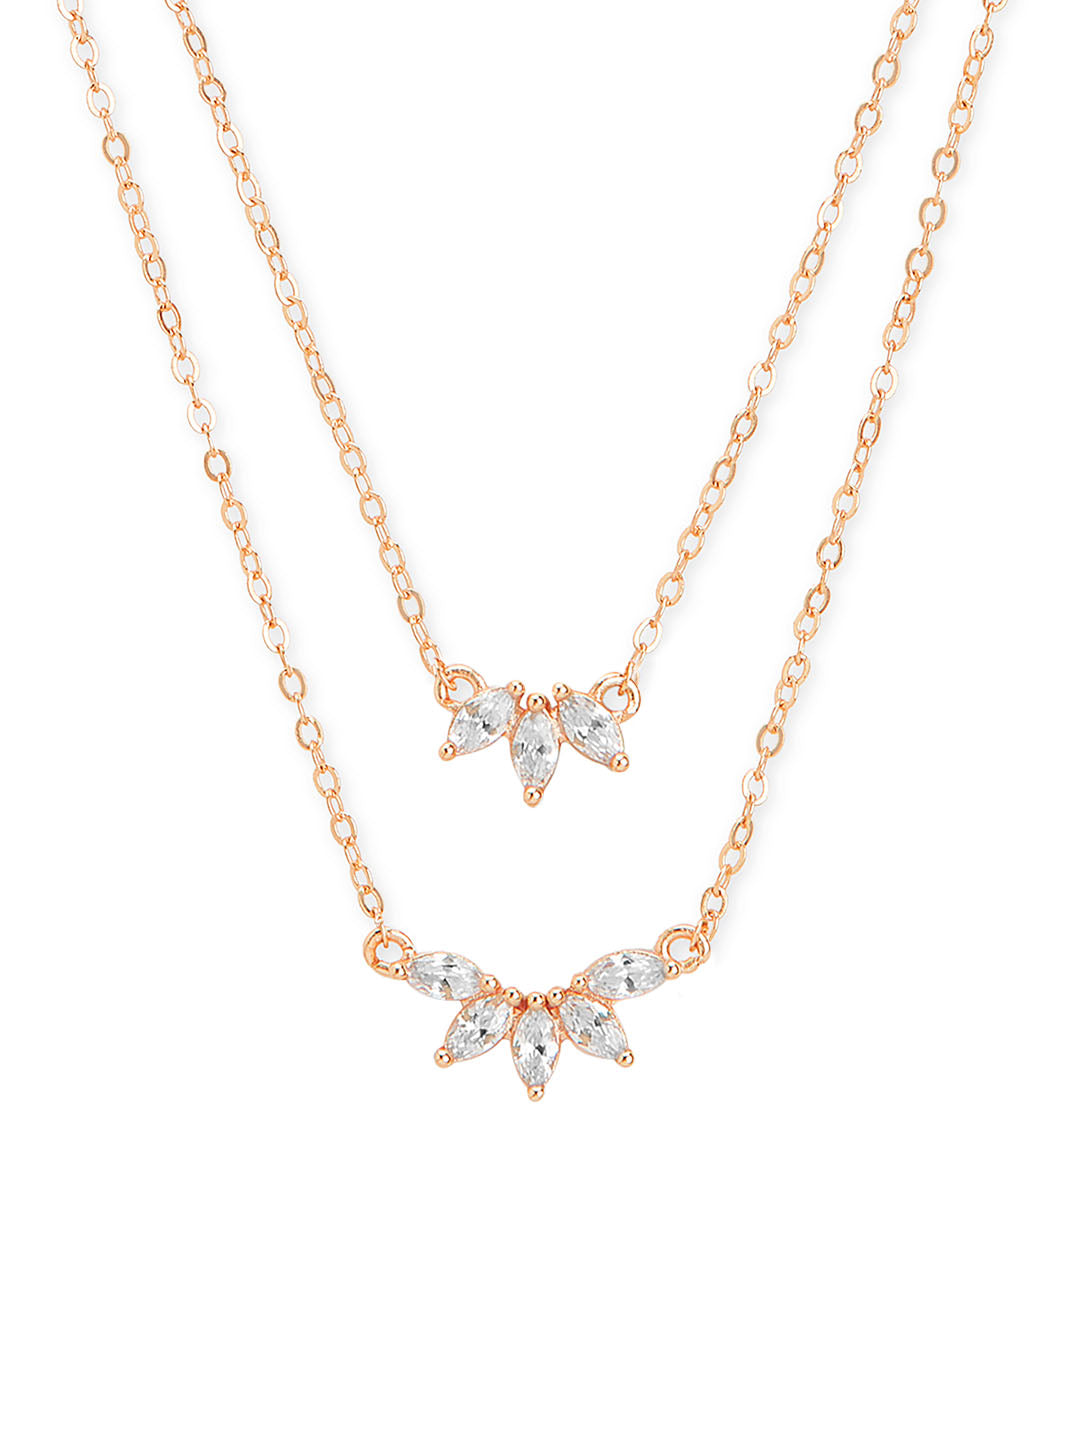 Marquis Shape Diamond Necklace